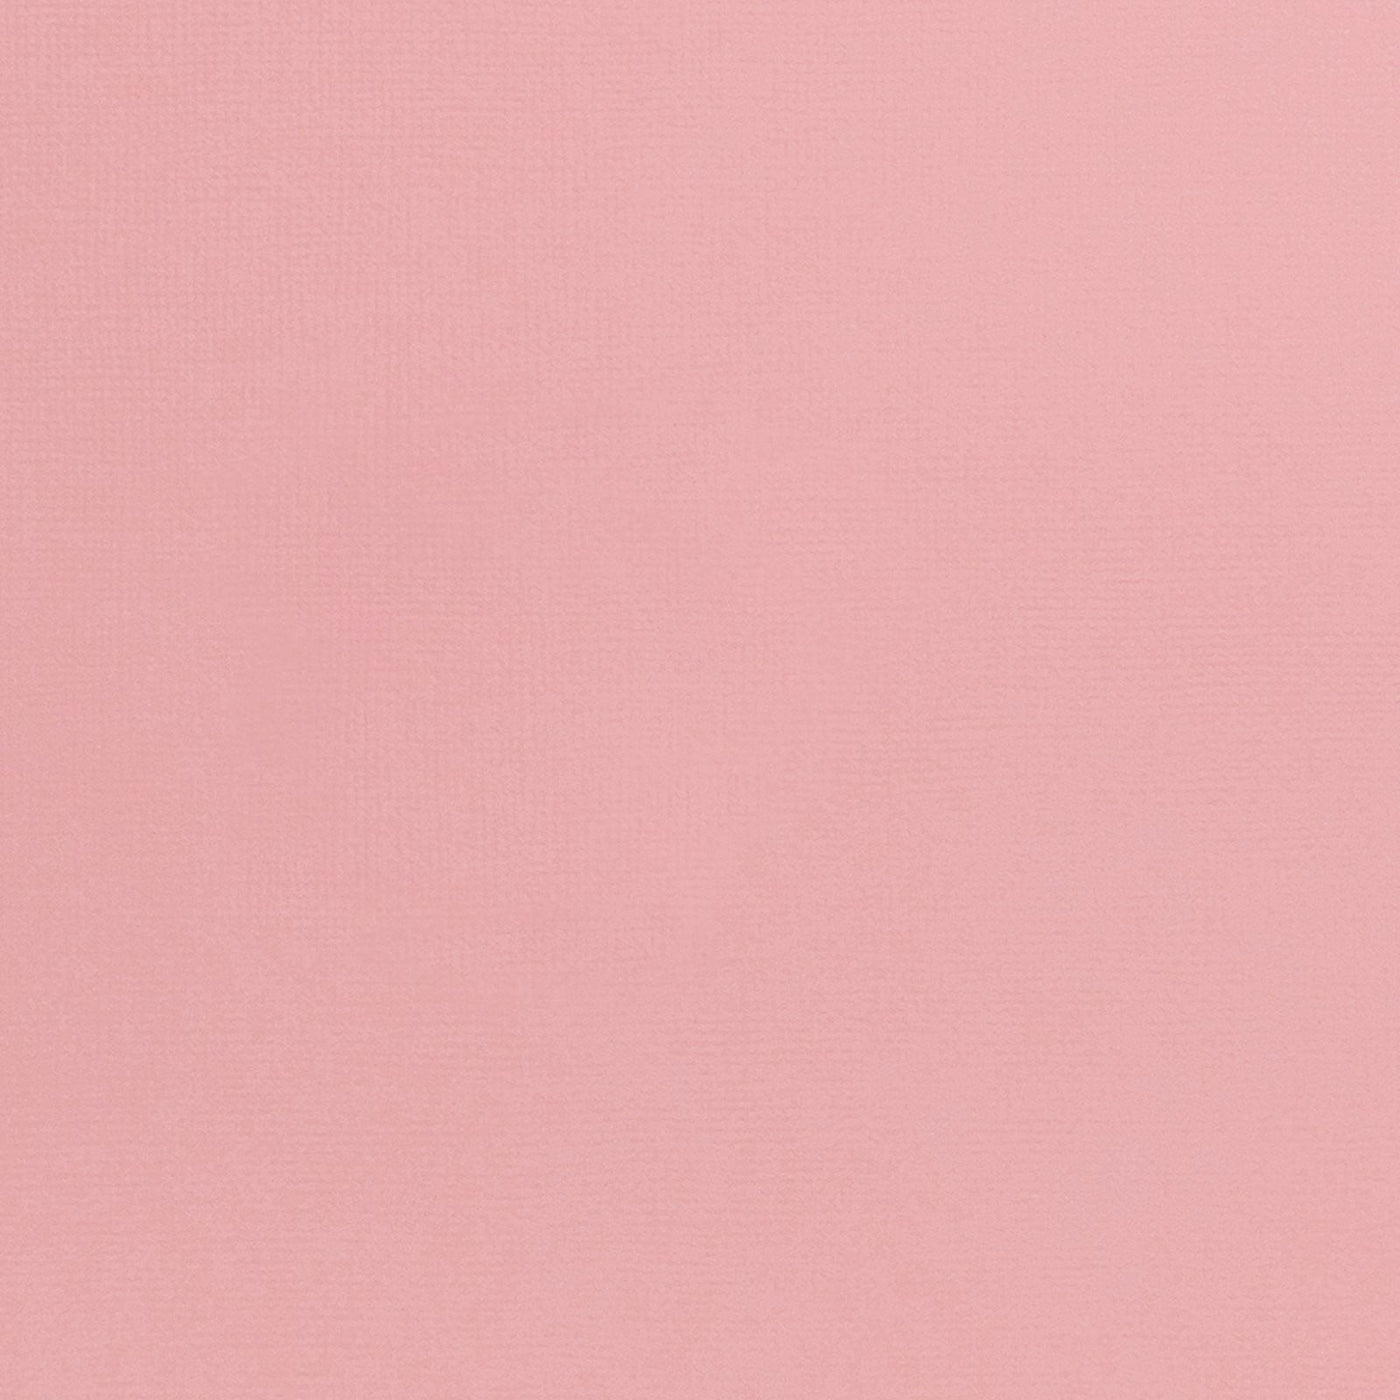 PEONY pink cardstock - 12x12 inch - 80 lb - textured scrapbook paper - American Crafts